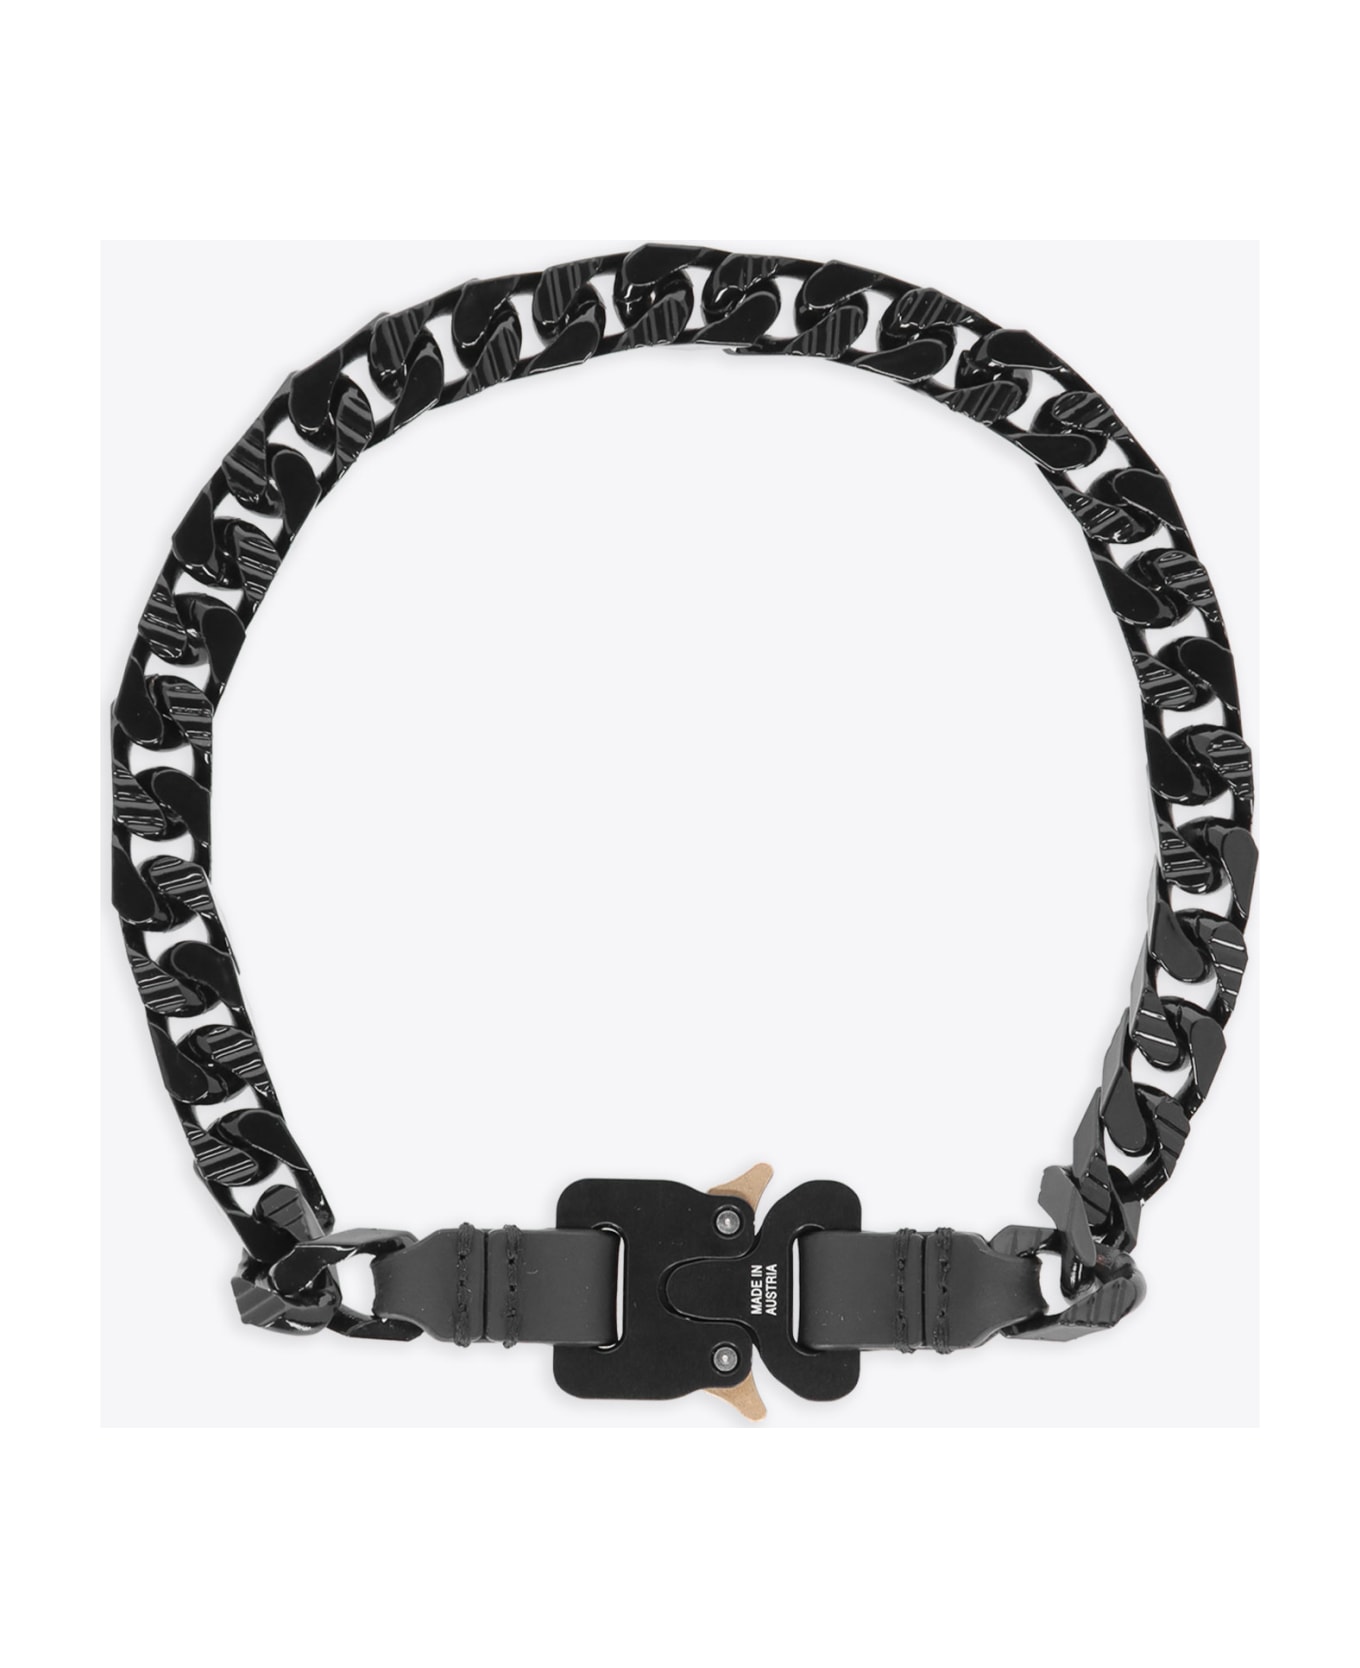 1017 ALYX 9SM Colored Chain Necklace Black Metal Chain Necklace With Rollercoaster Buckle - Colored Chain Necklace - BLACK